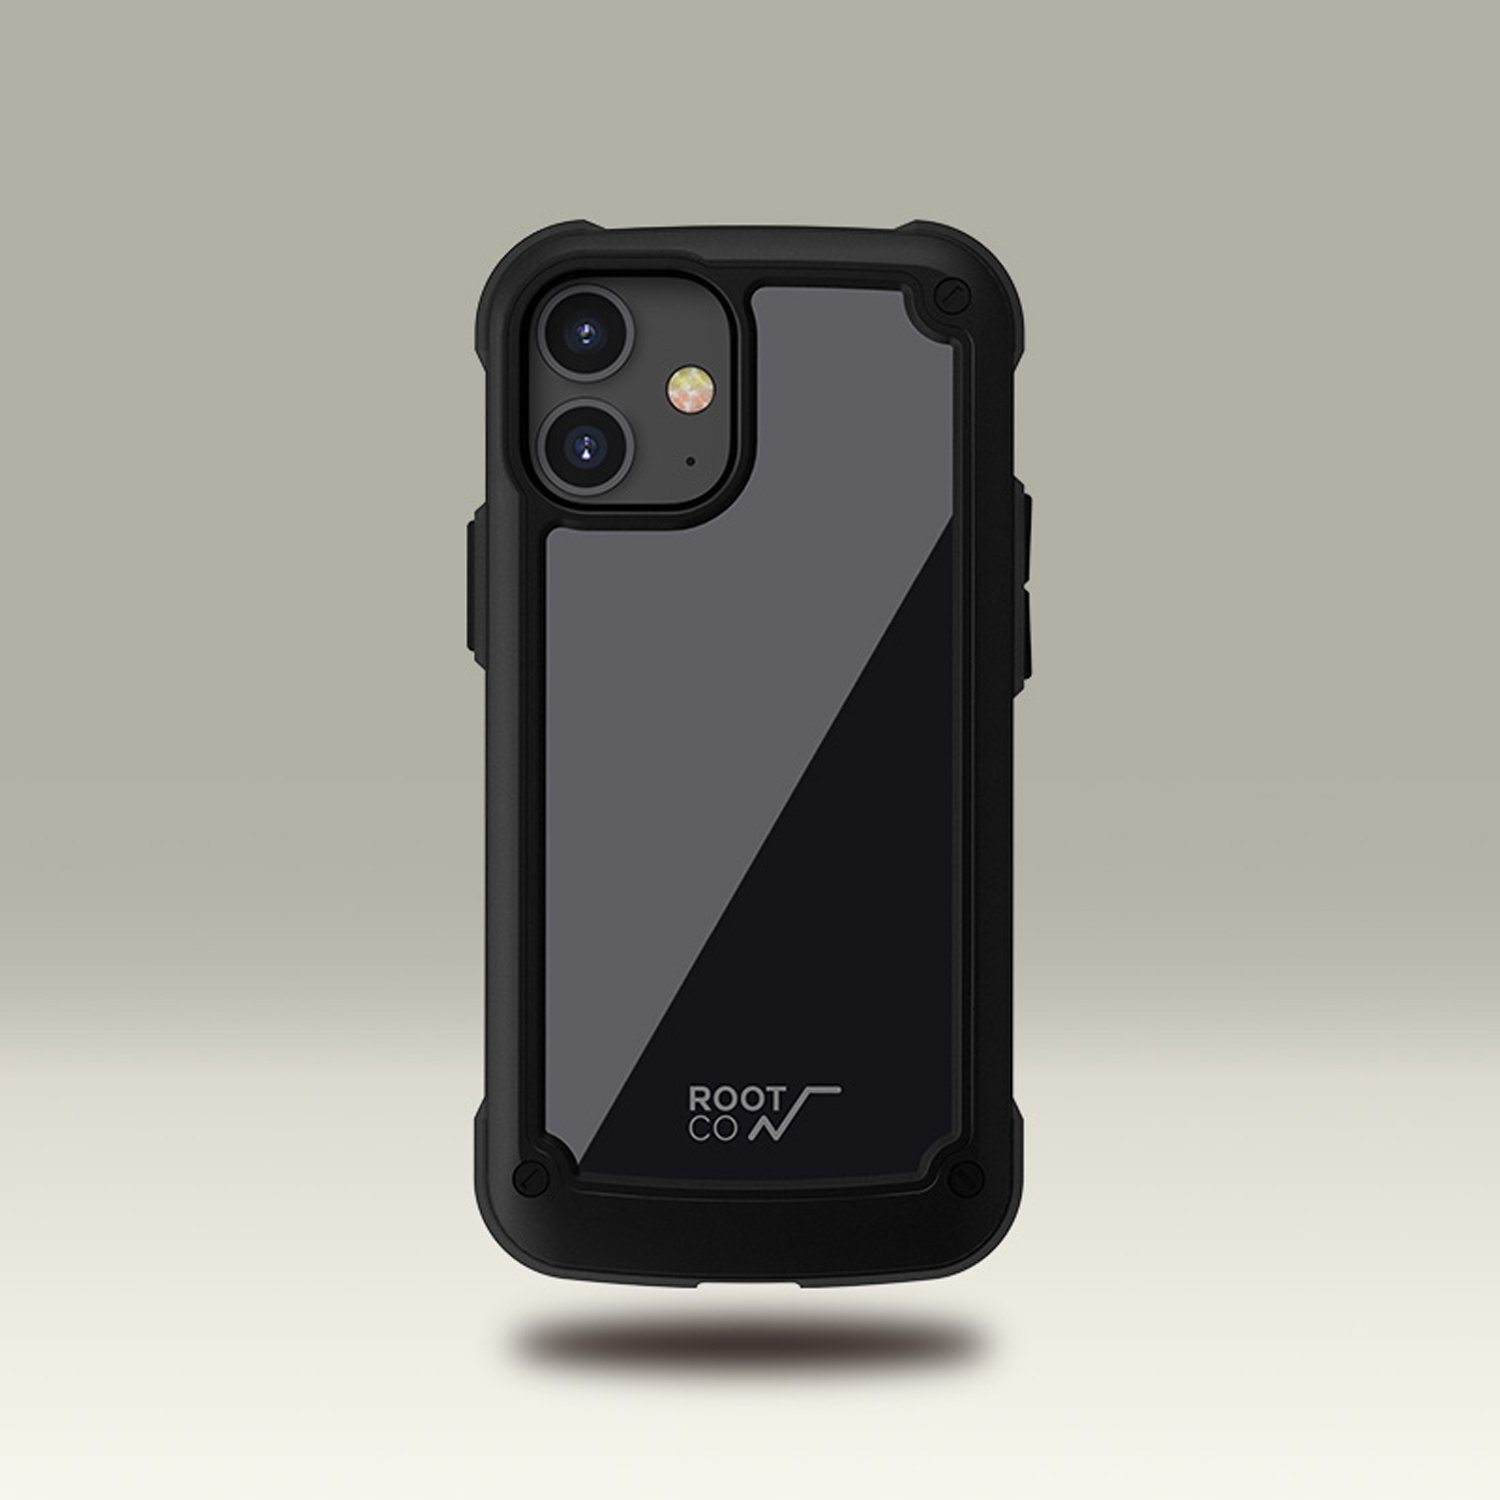 ROOT CO. Gravity Shock Resist Tough & Basic Case for iPhone 12 mini 5.4"(2020), Black Default ROOT CO. 